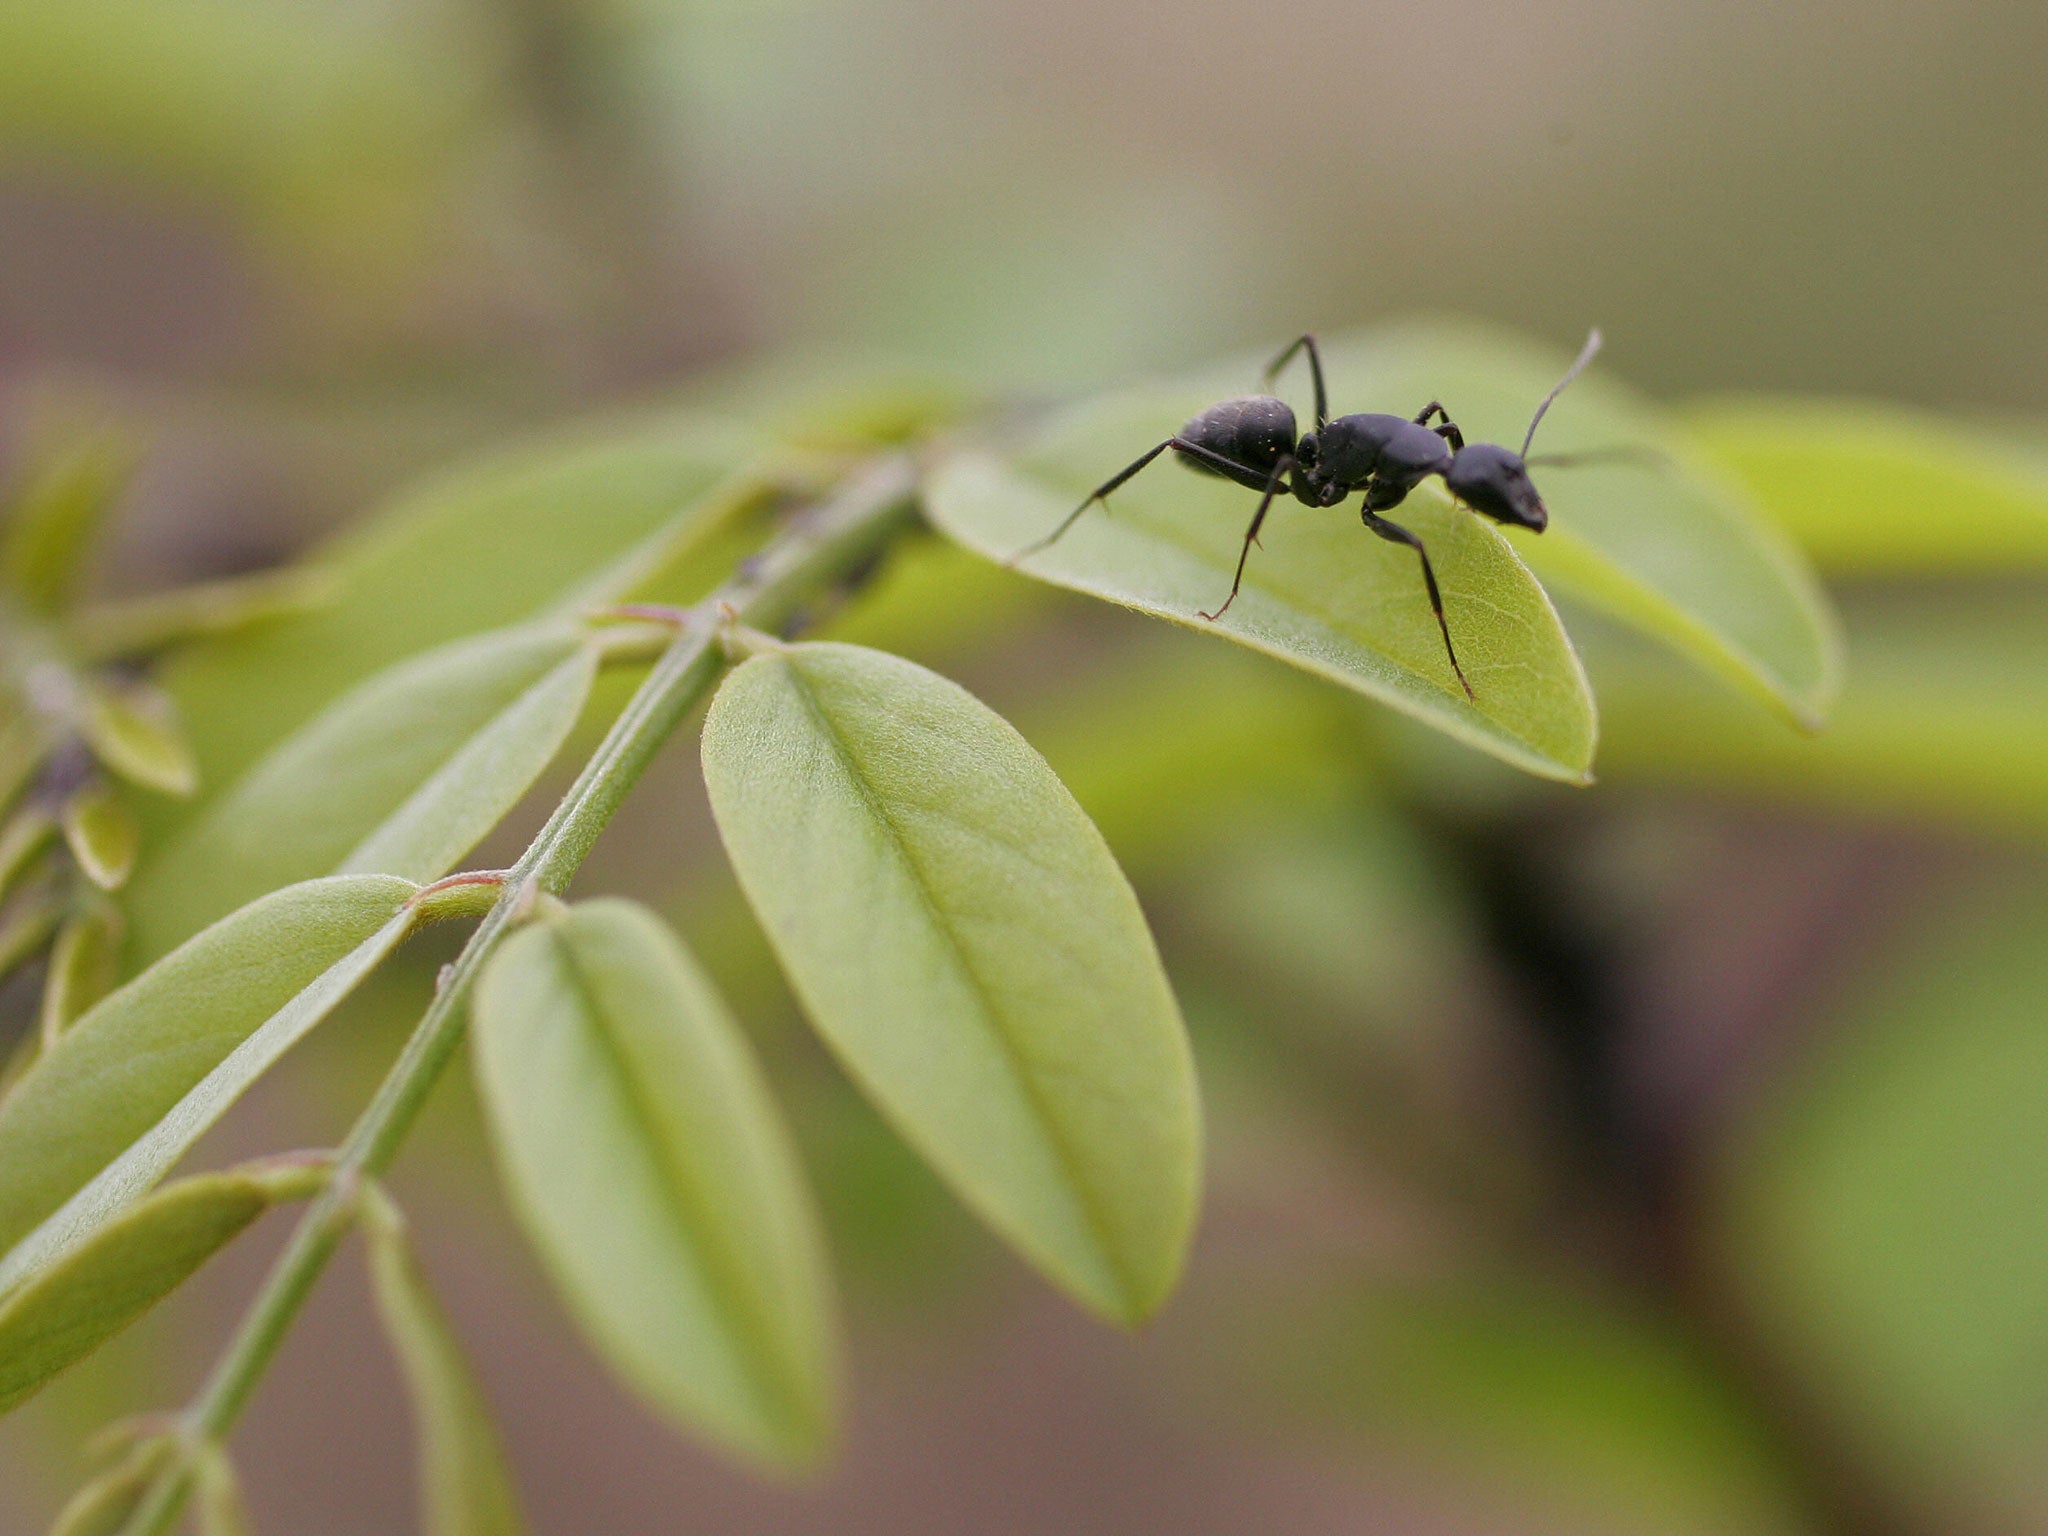 An ant sits on a leaf.